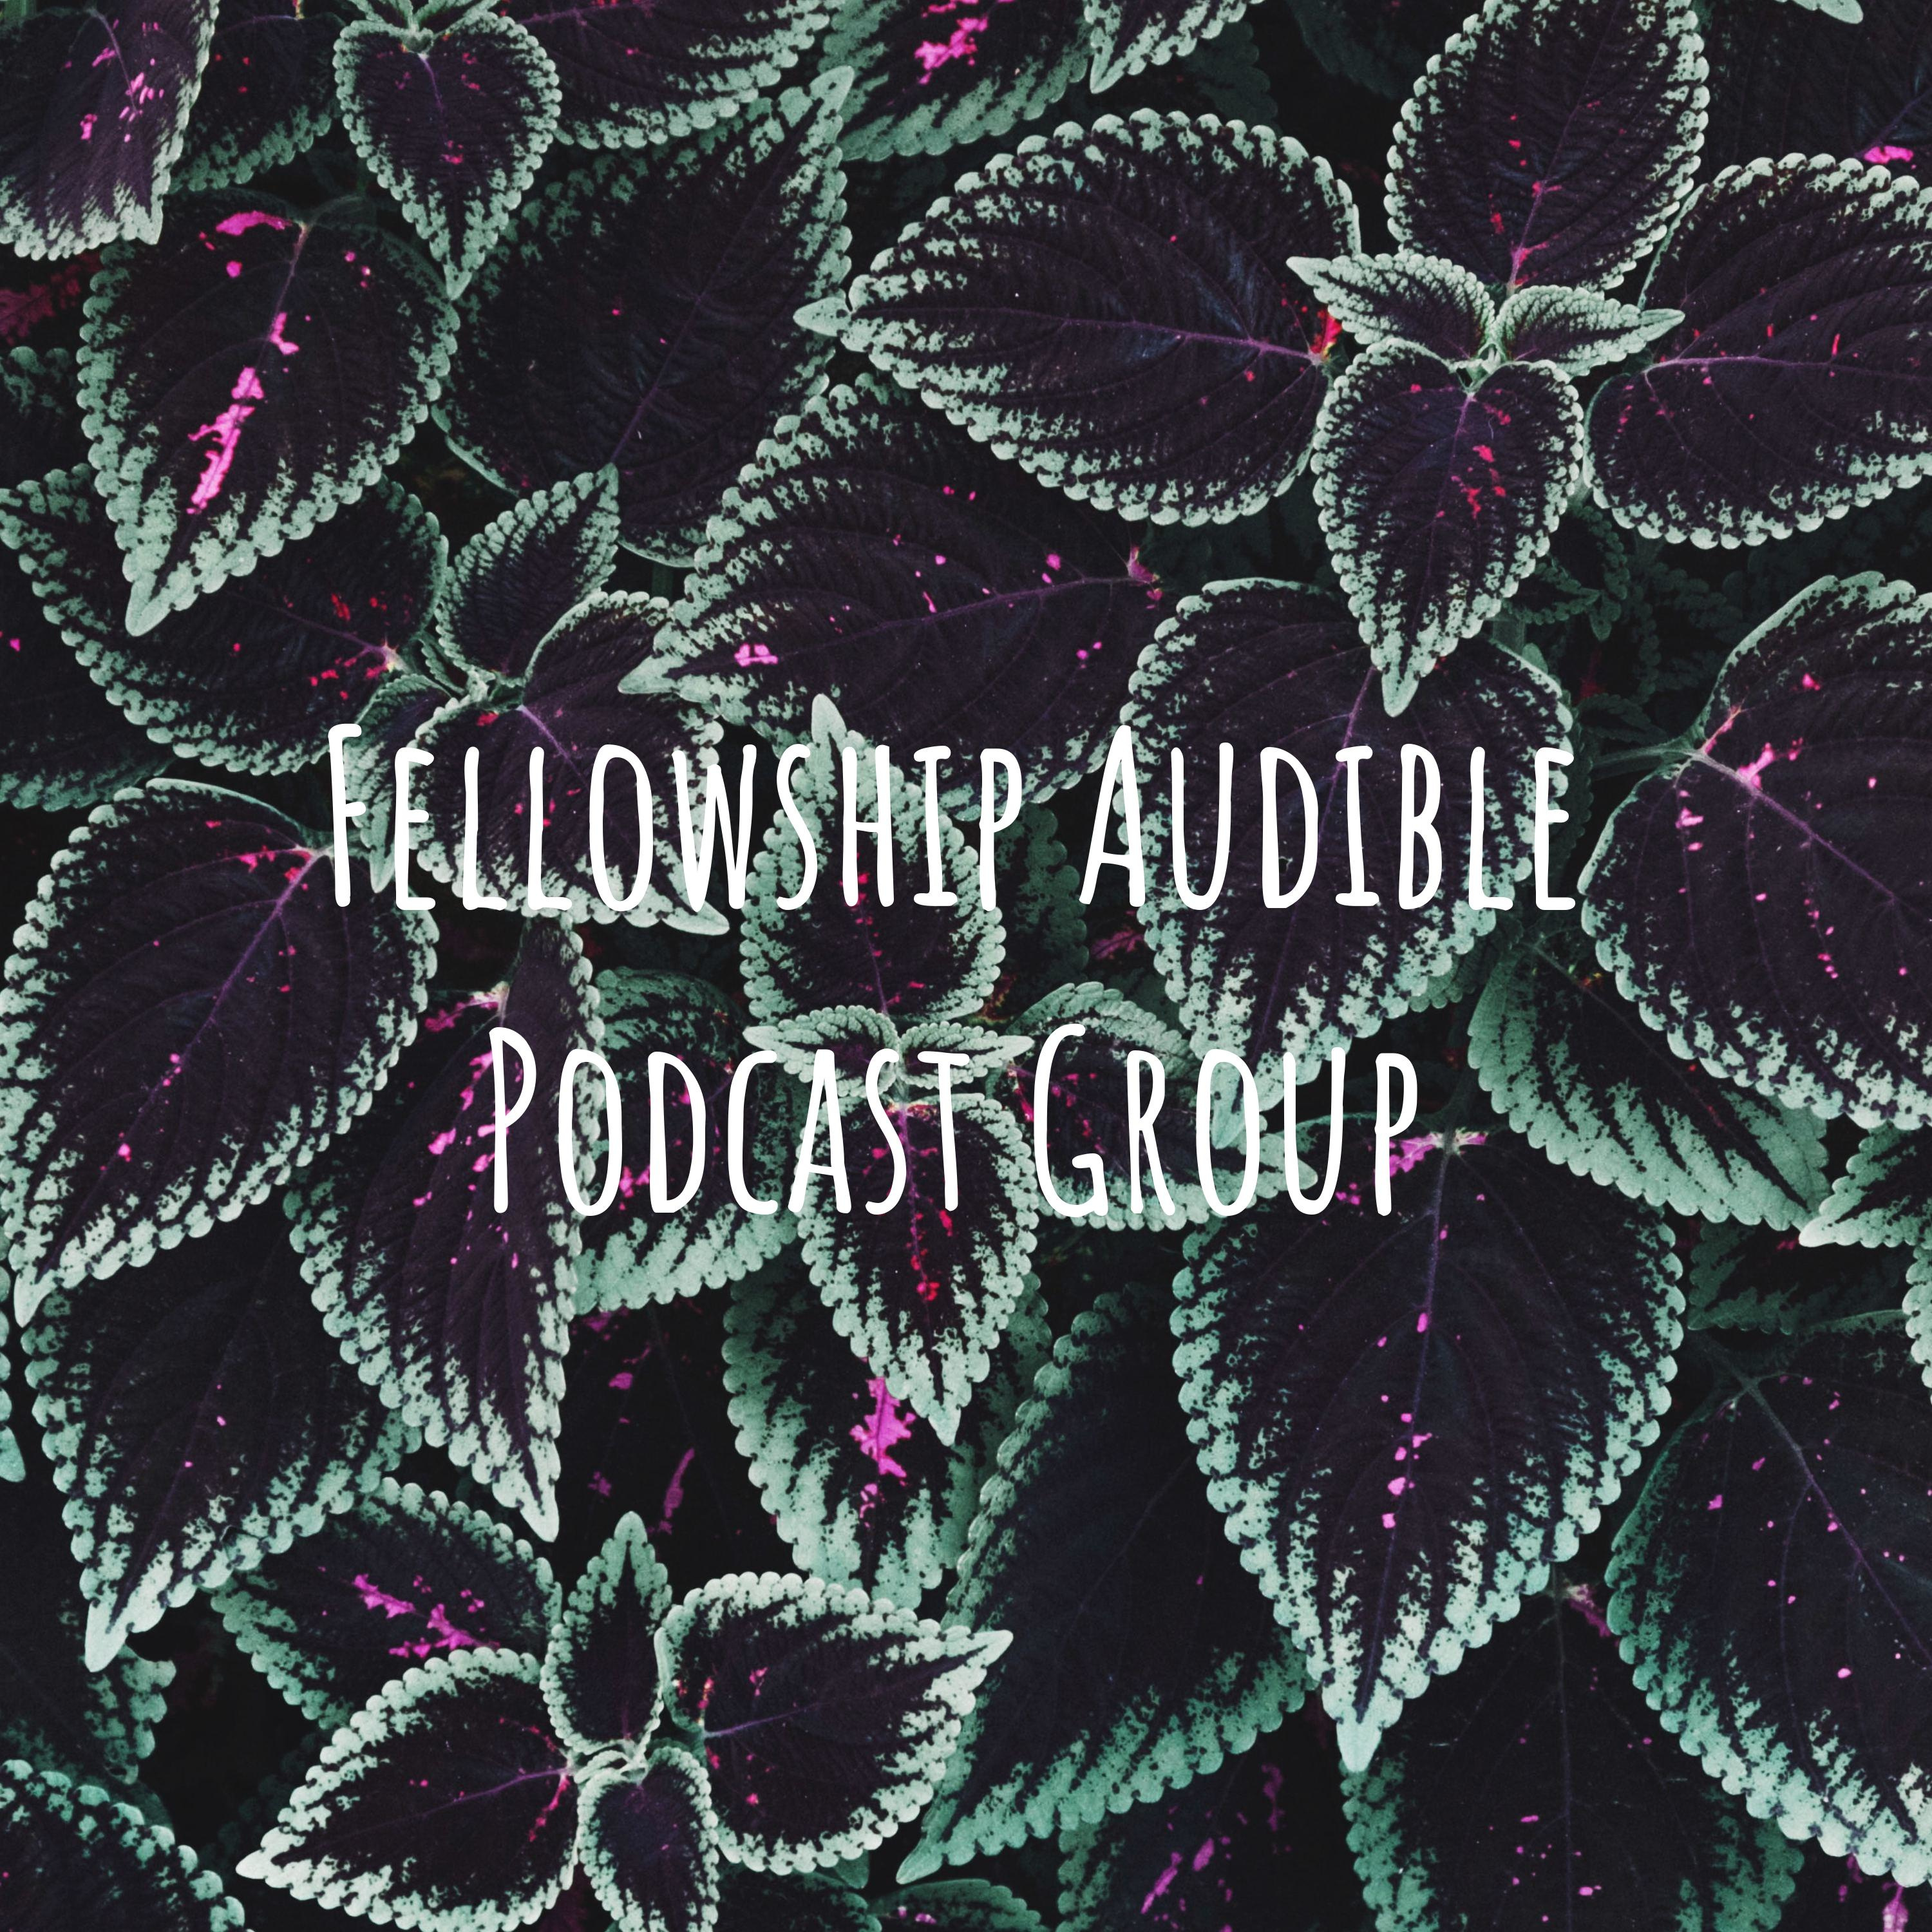 Fellowship Audio Podcast 23NOV19 | Spoiler-free in the galaxy